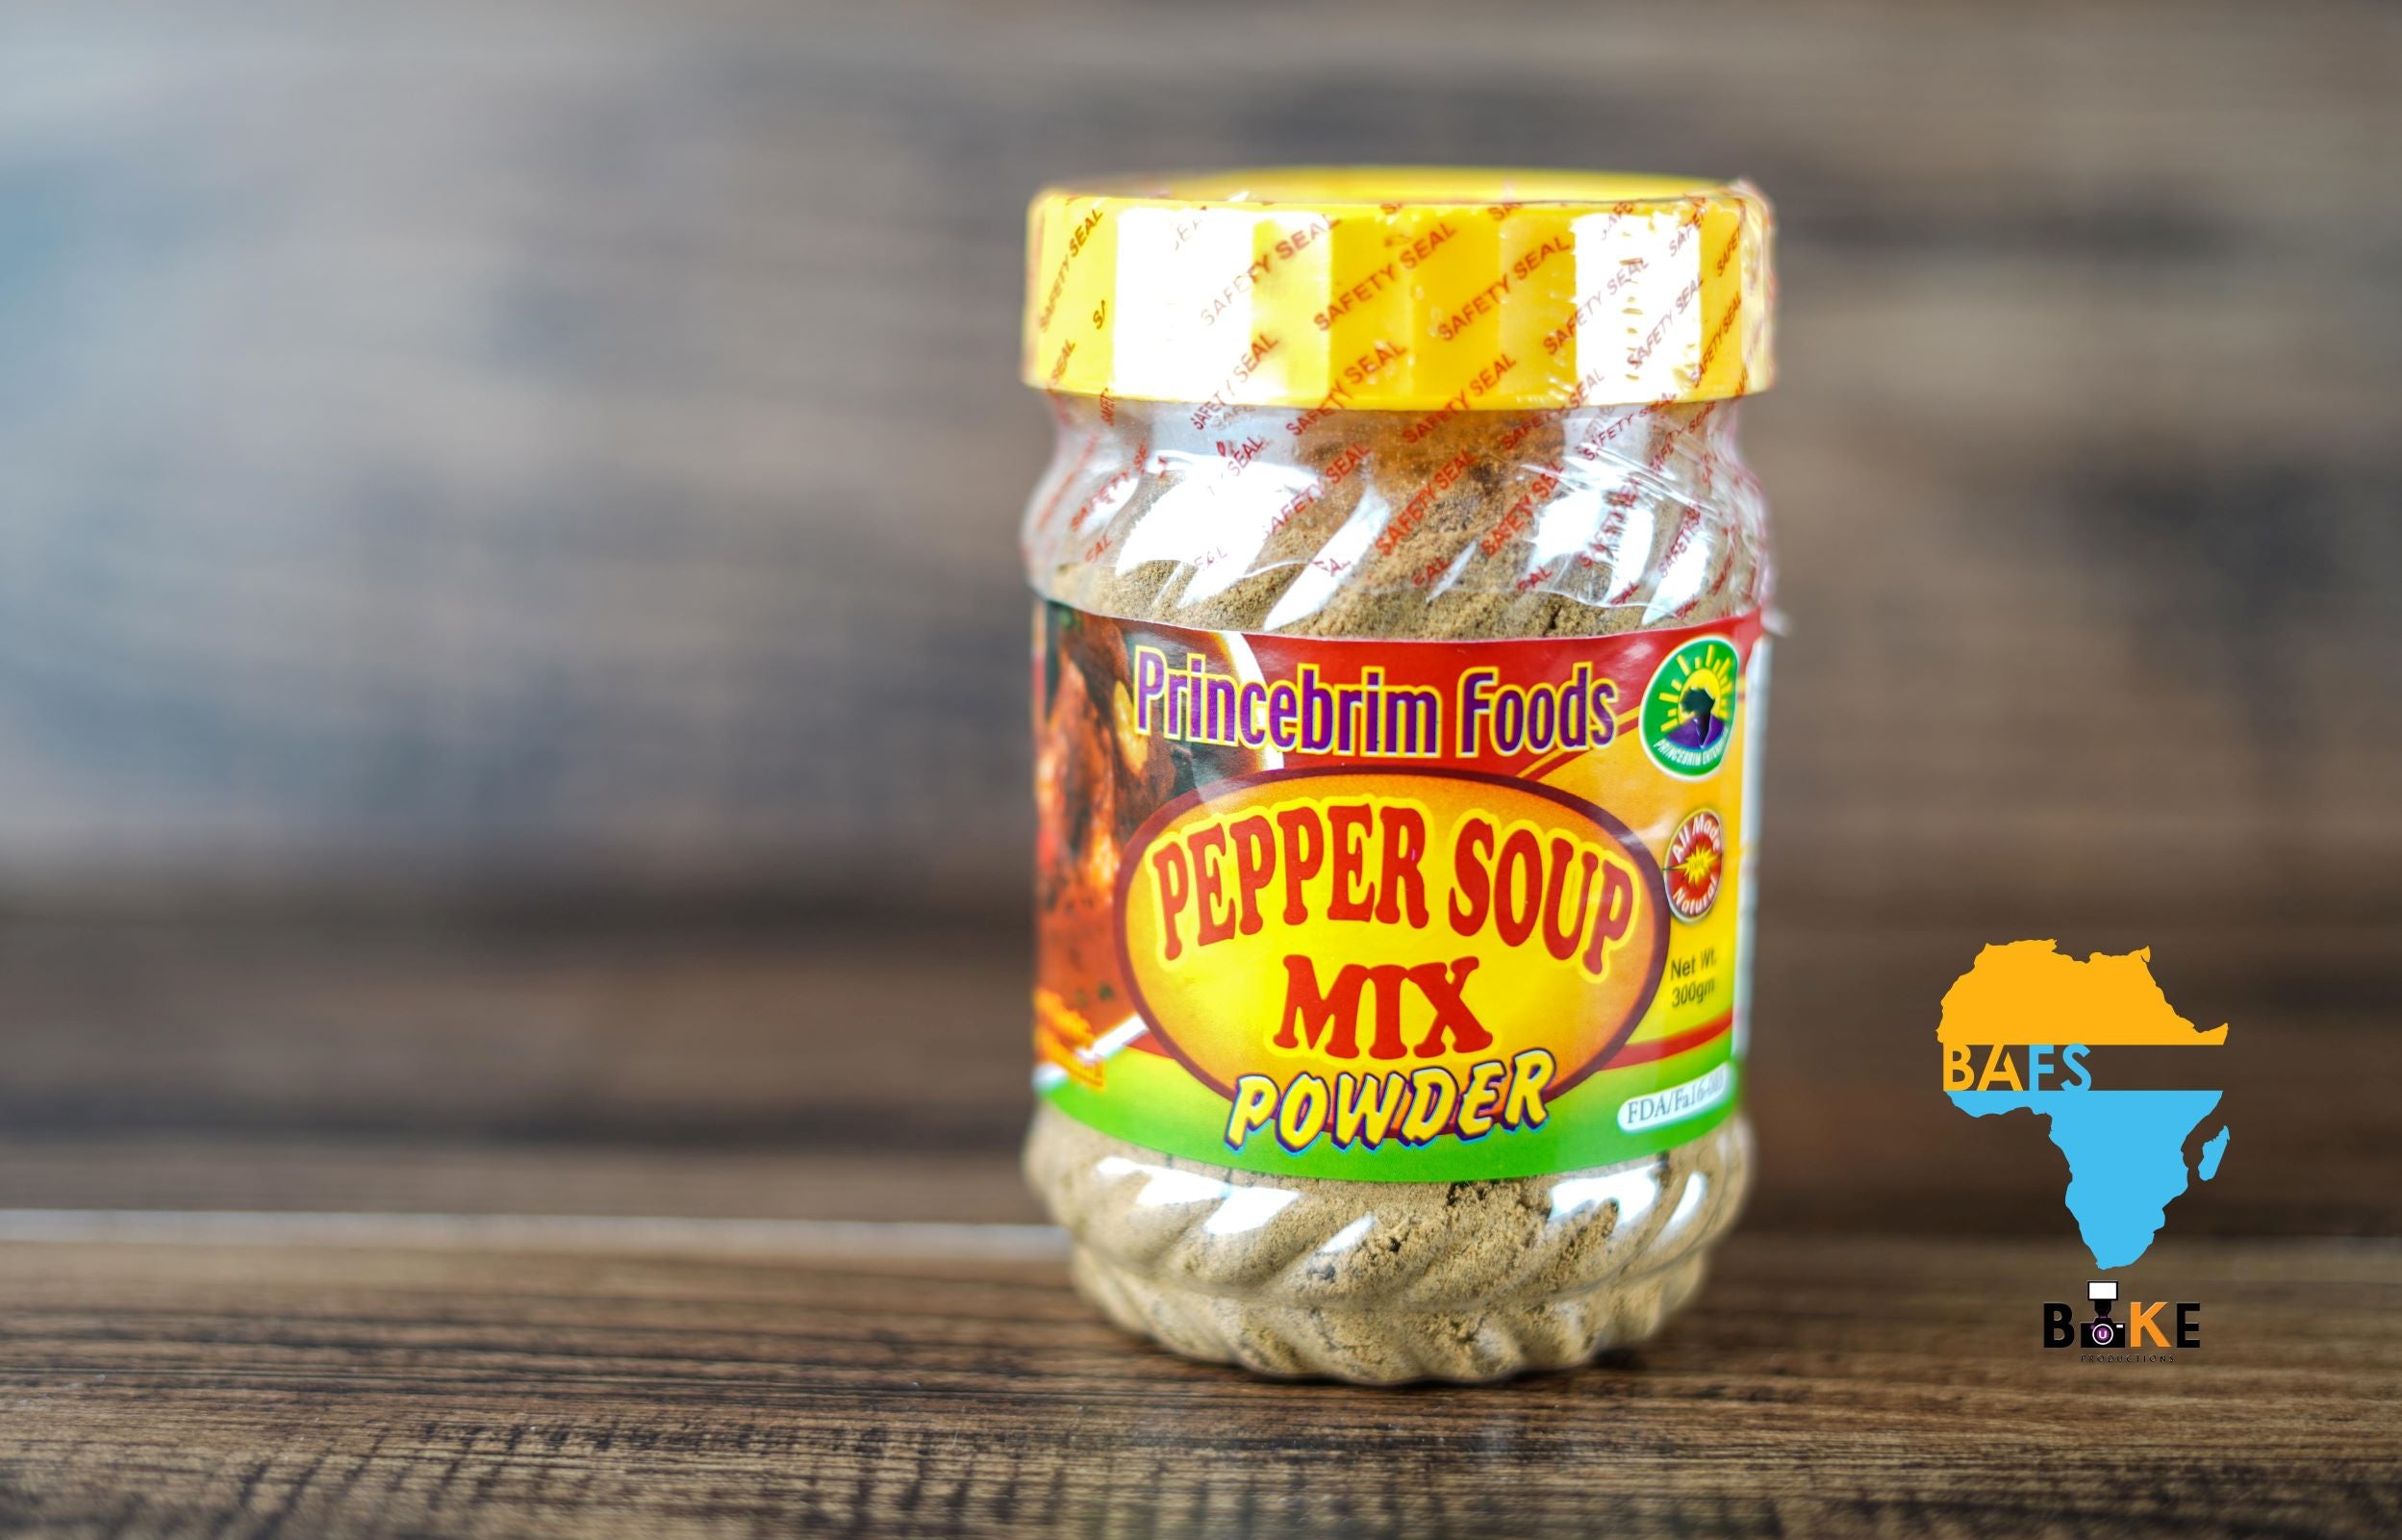 Princebrim Foods Pepper Soup Mix Powder